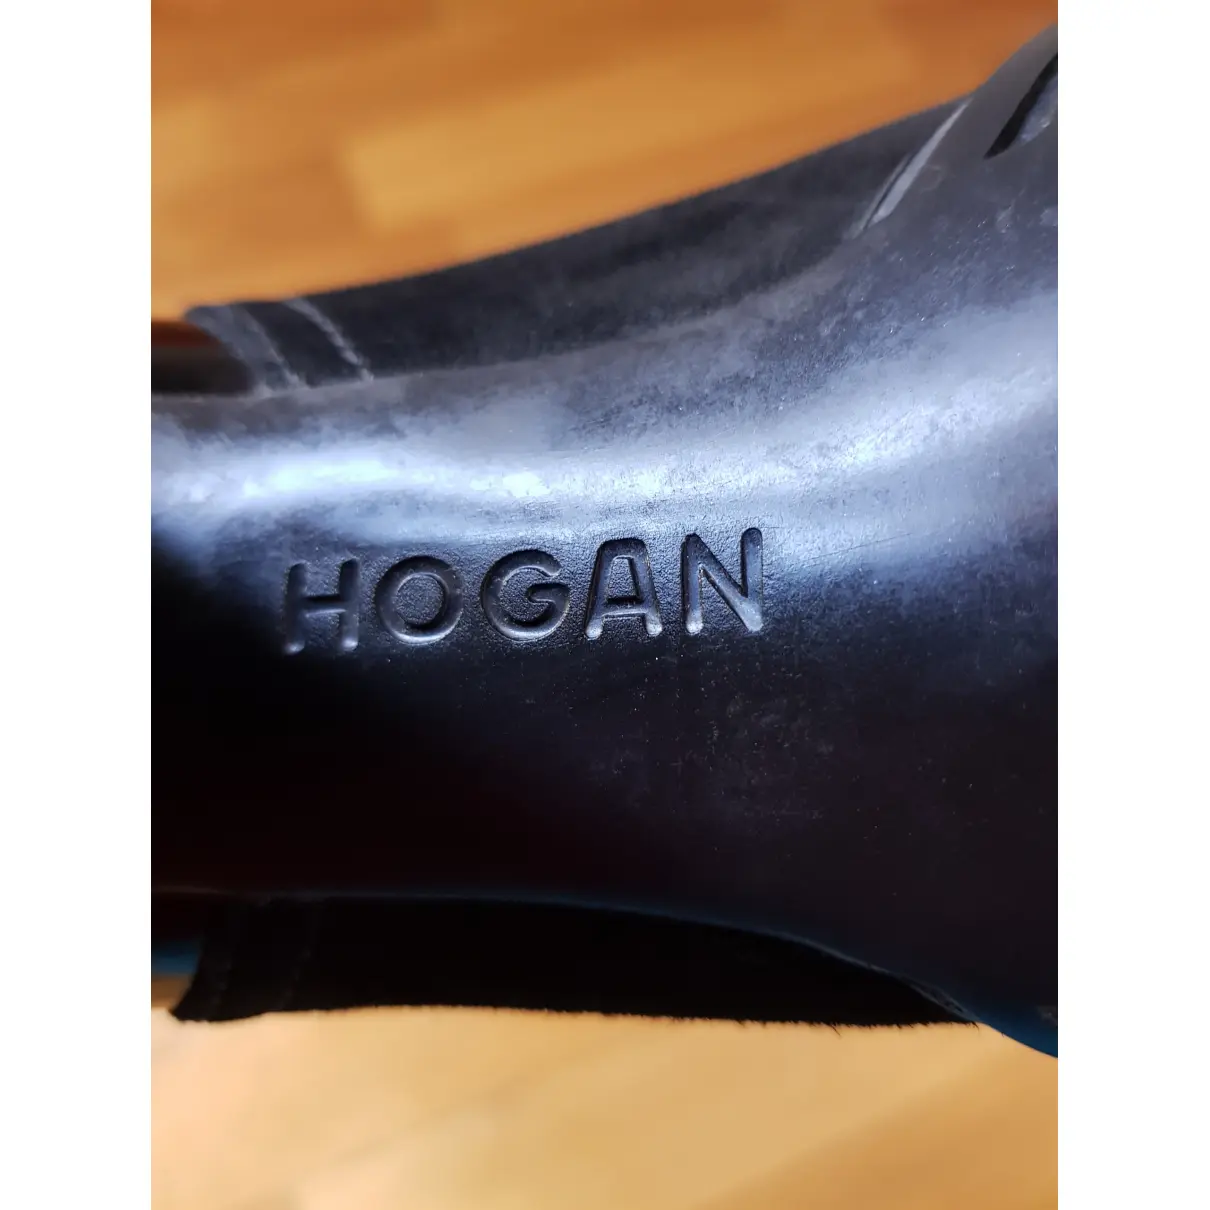 Luxury Hogan Ankle boots Women